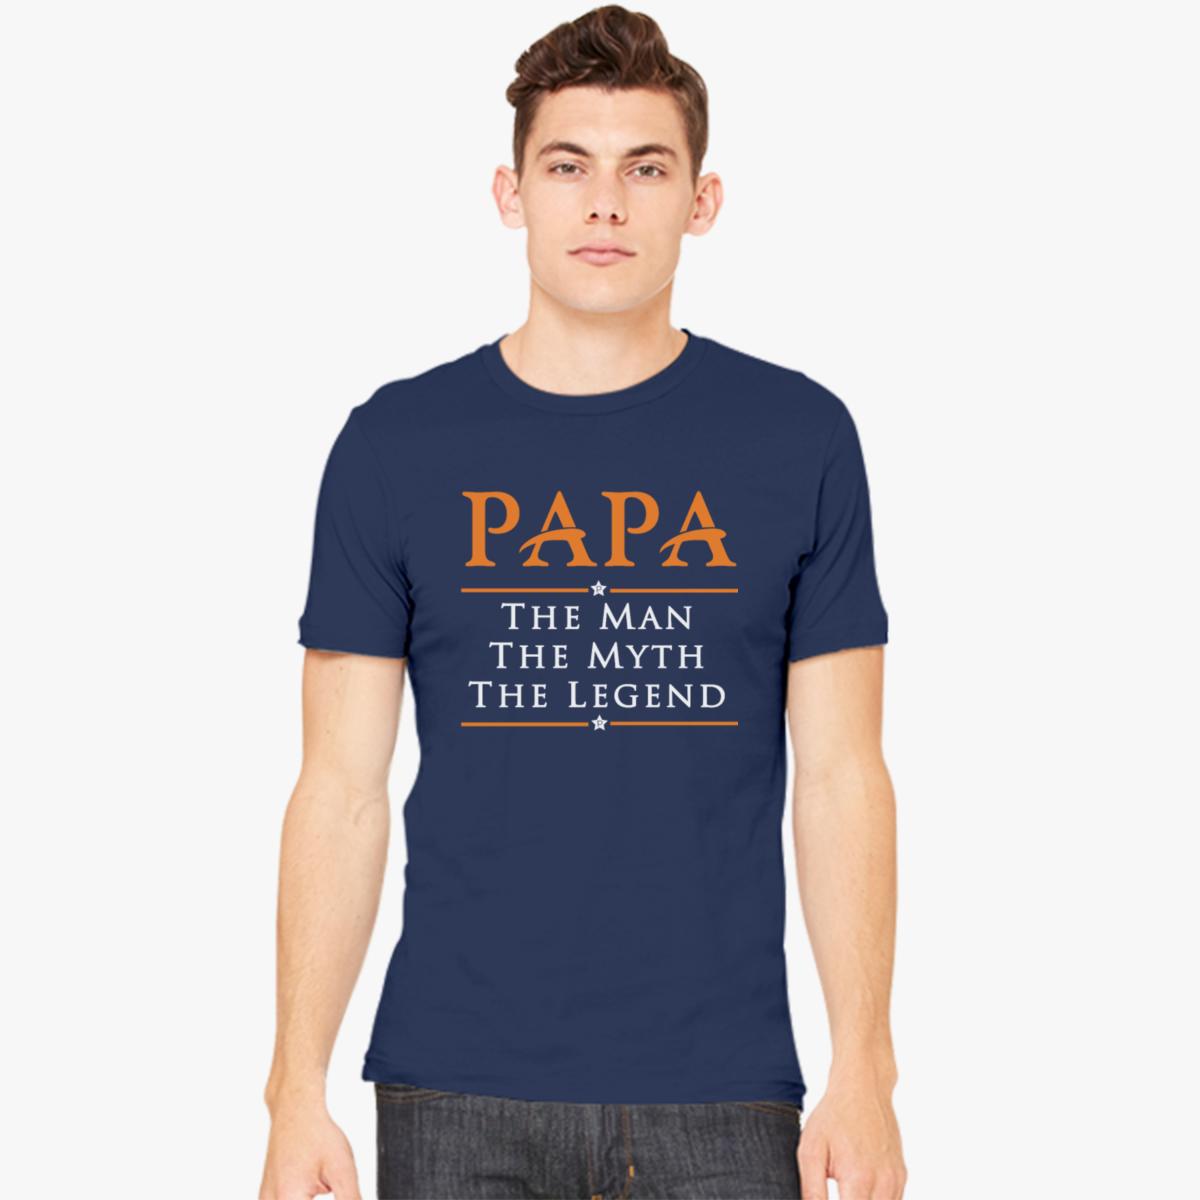 PAPA The Man - The Myth - The LegendPAPA The Man - The Myth - The Legend Men's T-shirt